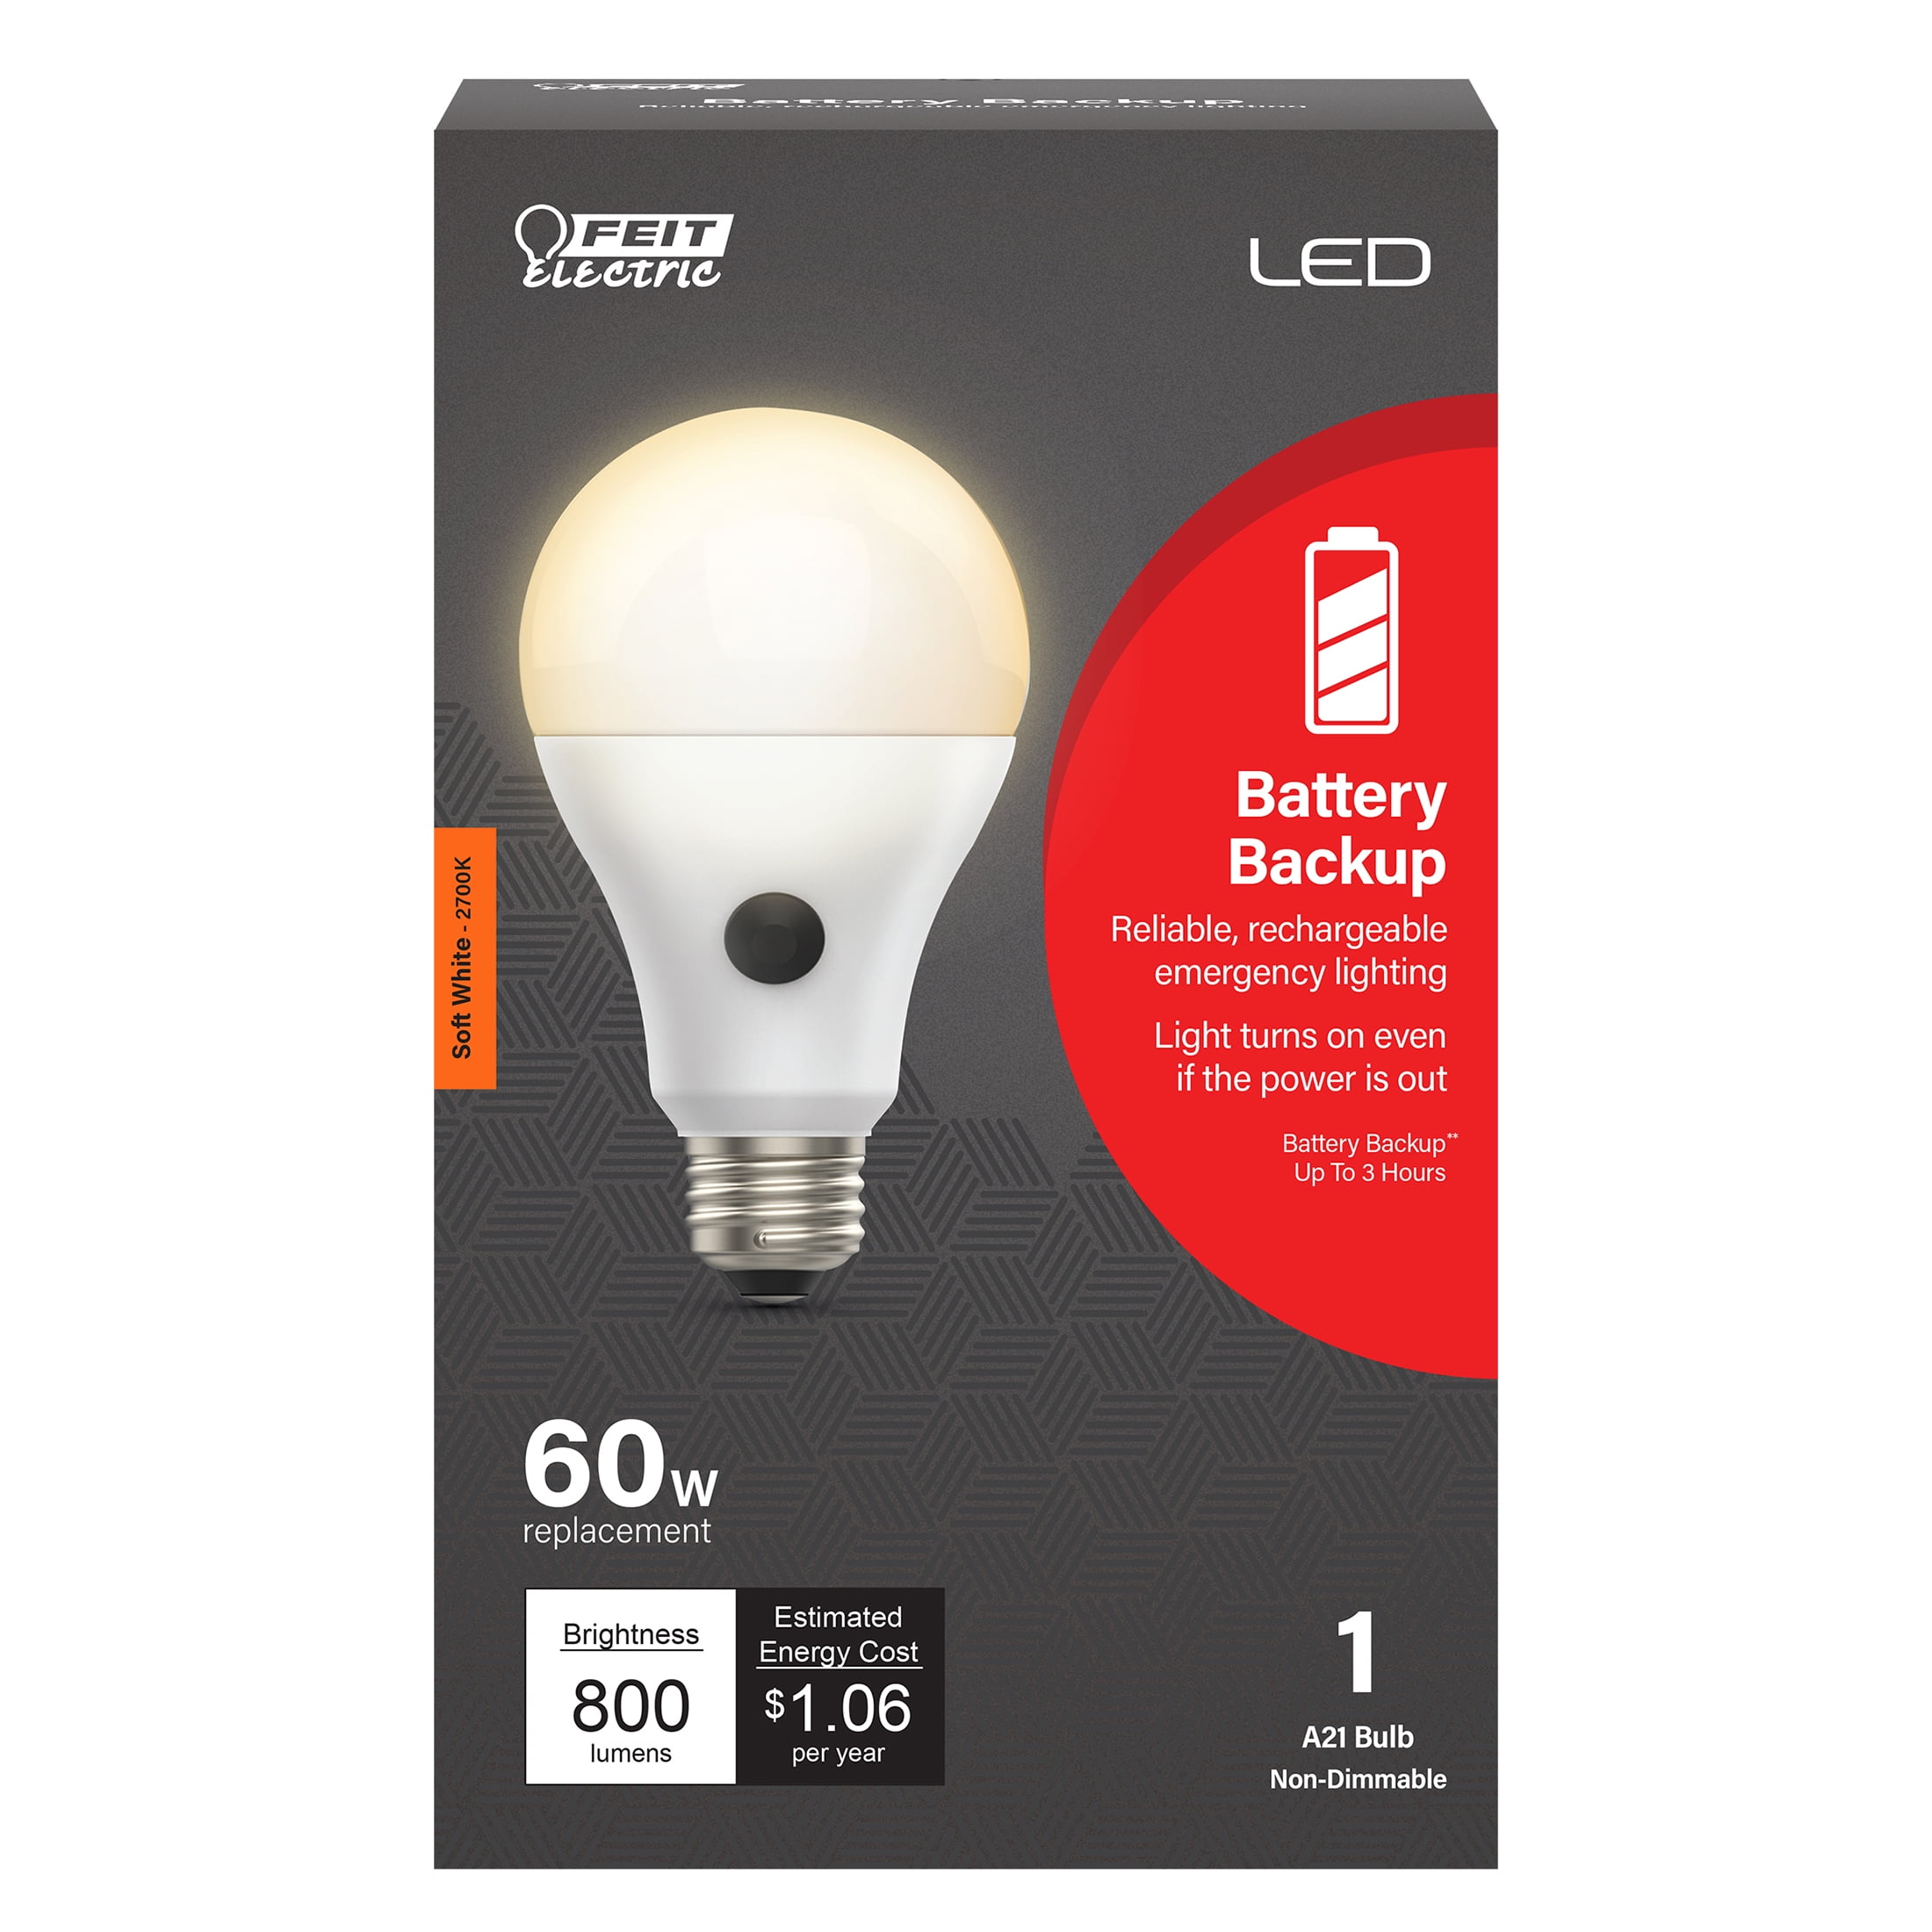 Feit Electric Intellibulb LED 8.8W (60W Equivalent) Soft White Battery Backup Light Bulb, A19, Medium (E26) Base, Non-Dimmable